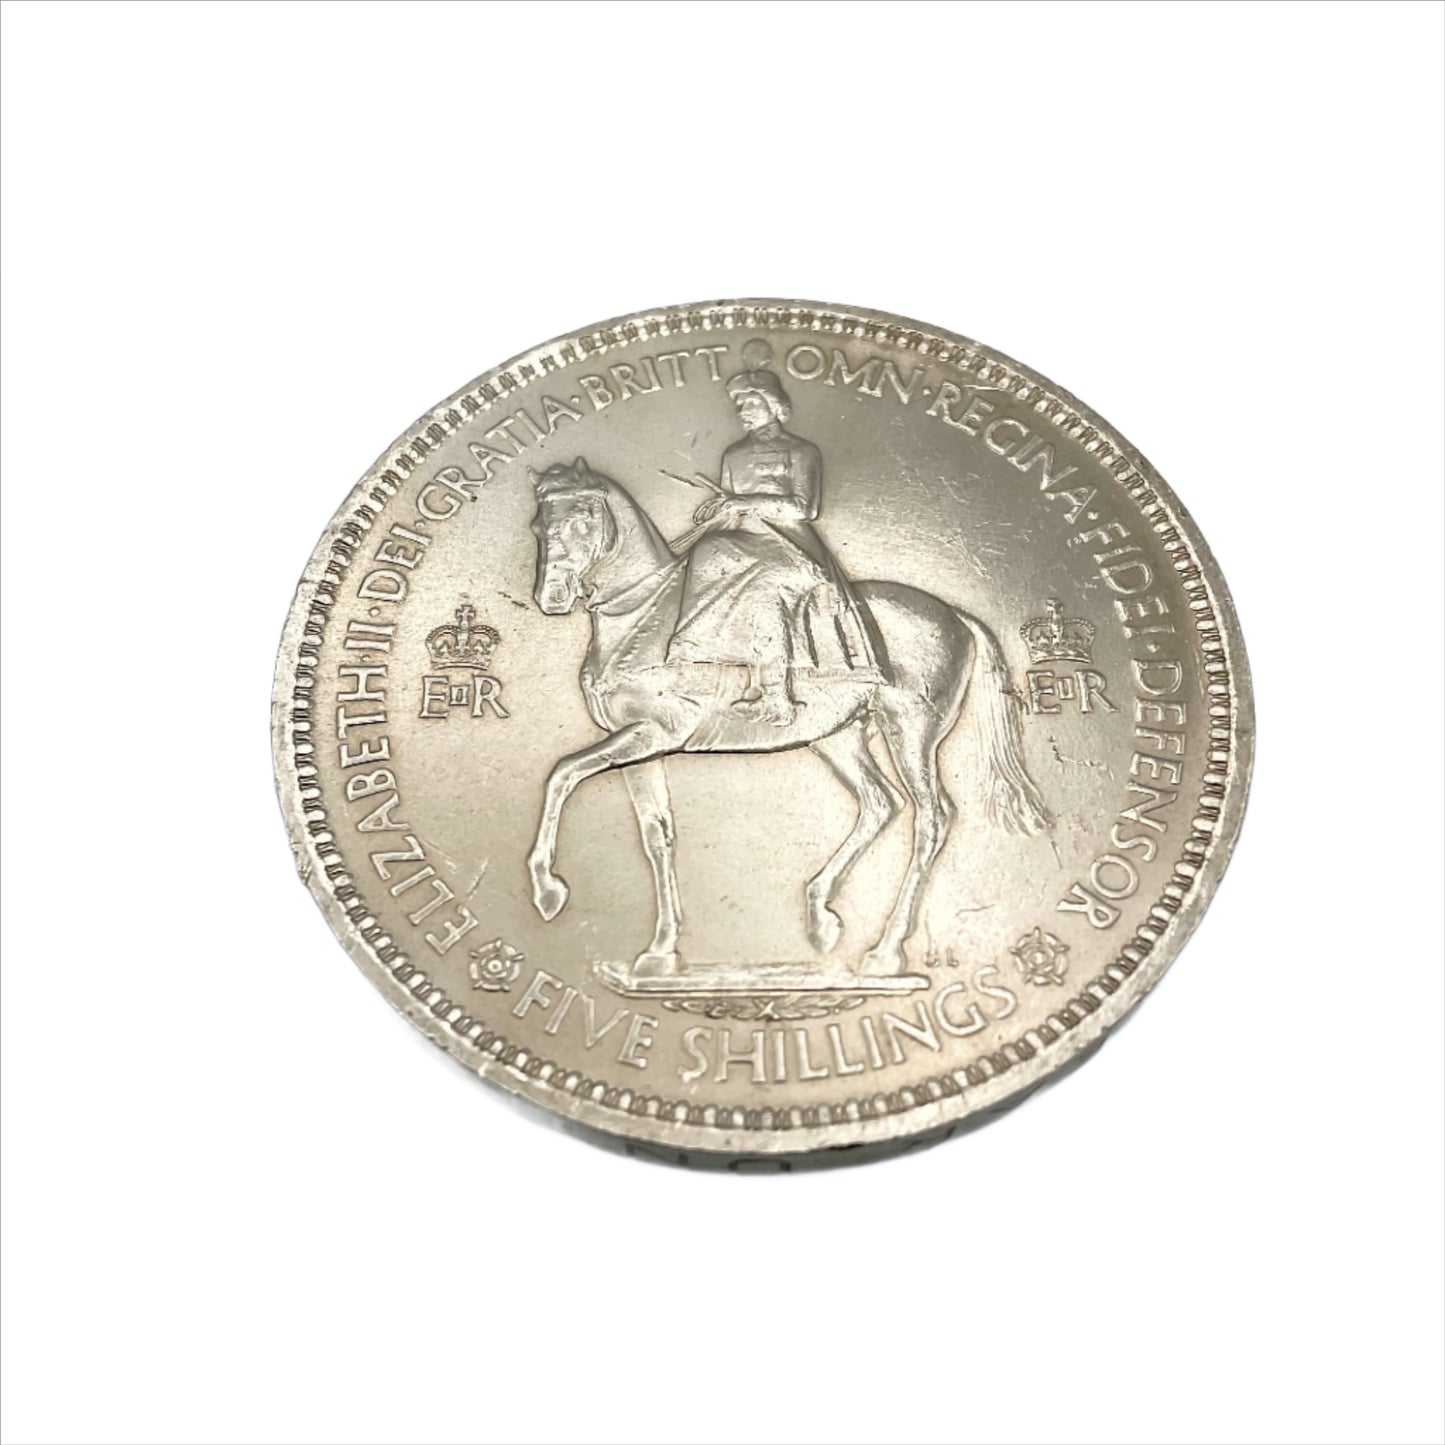 1953 Queen Elizabeth II Coronation Five Shilling Coin